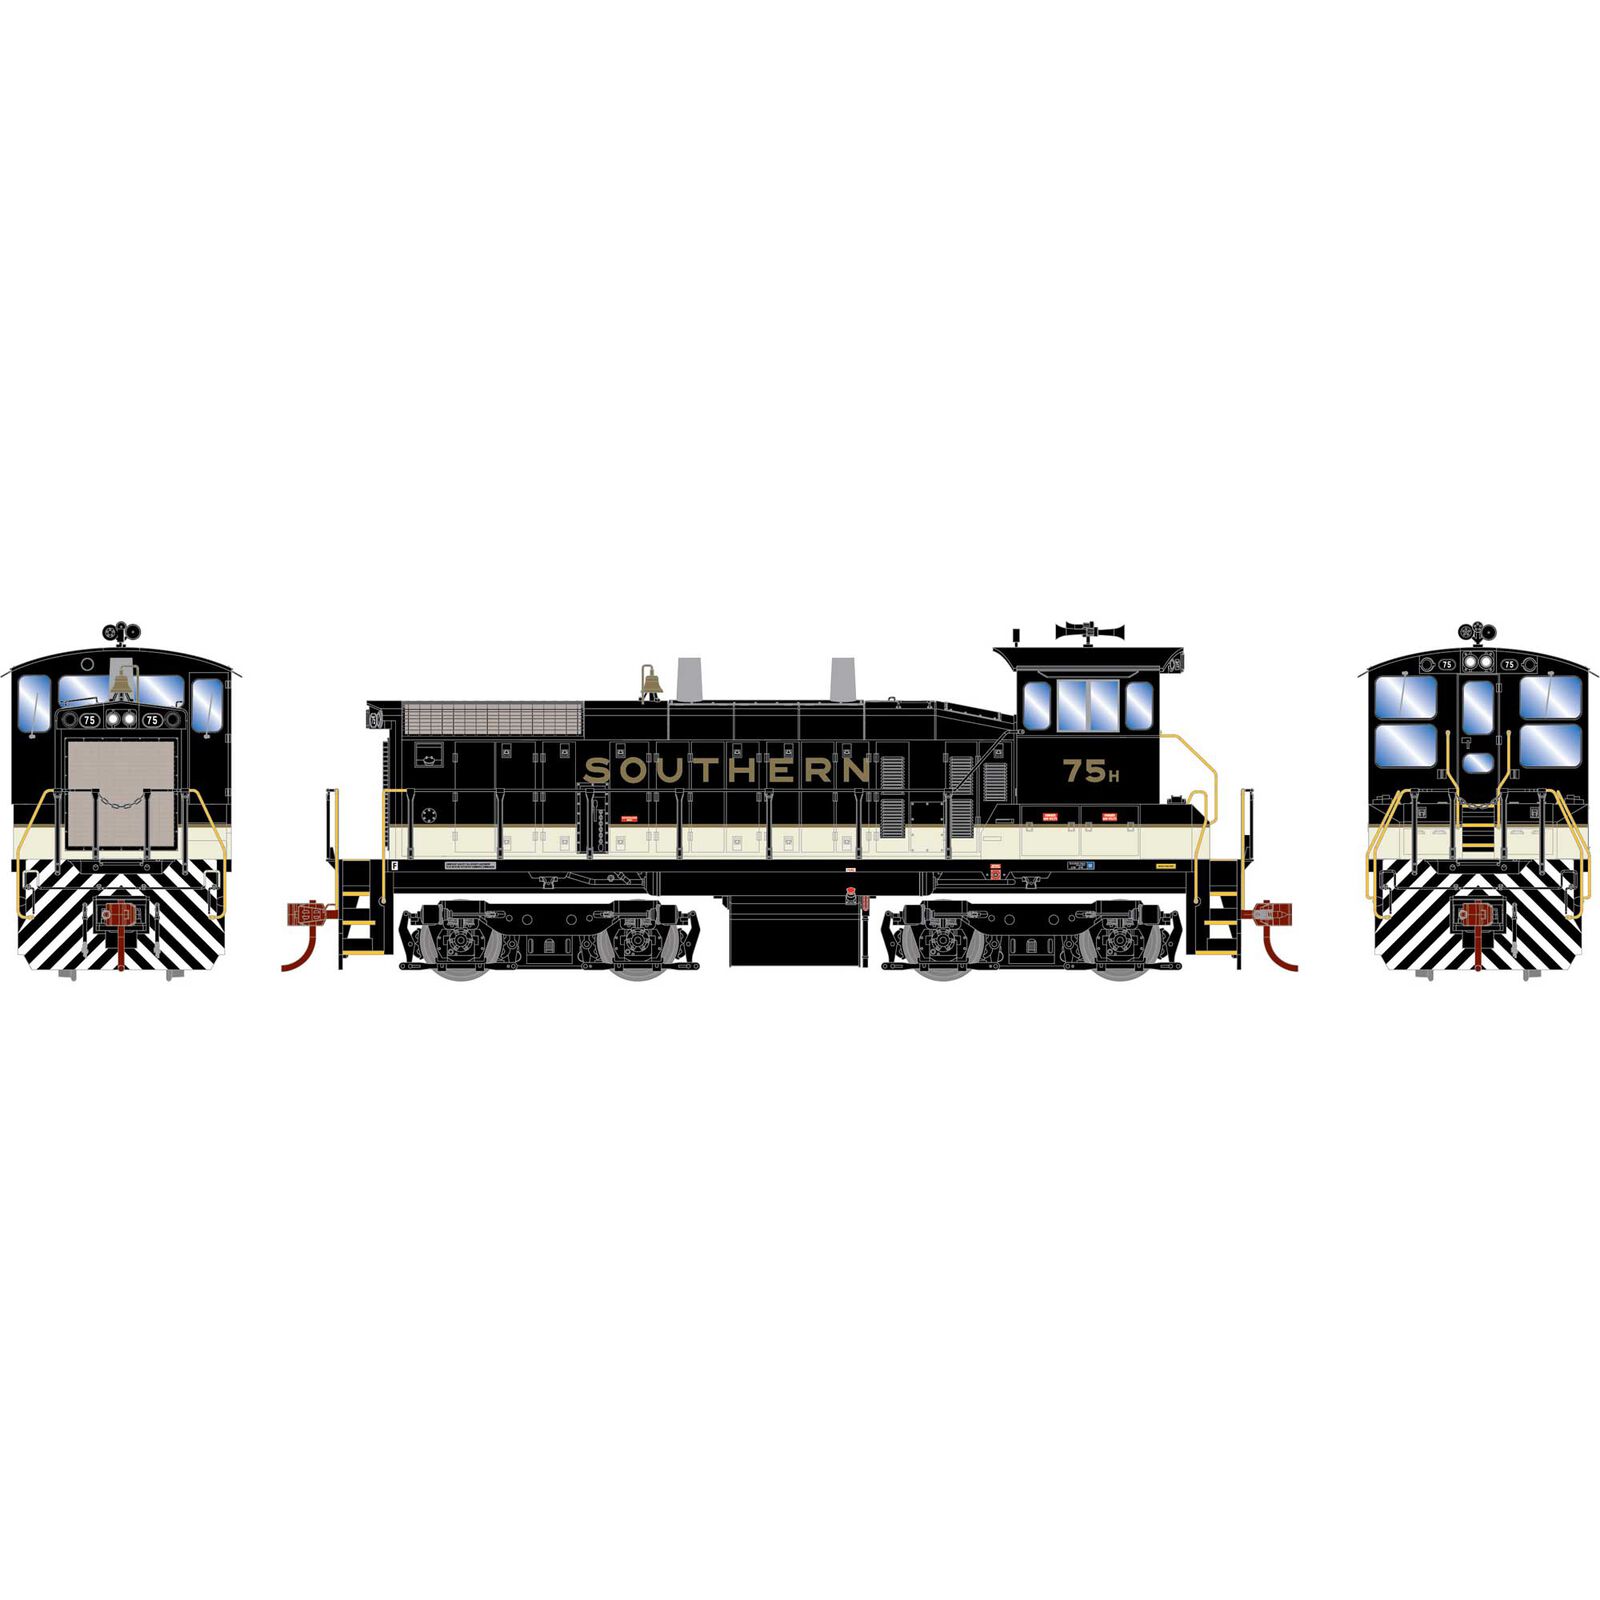 HO SW1500 Locomotive, Southern Railway #75H